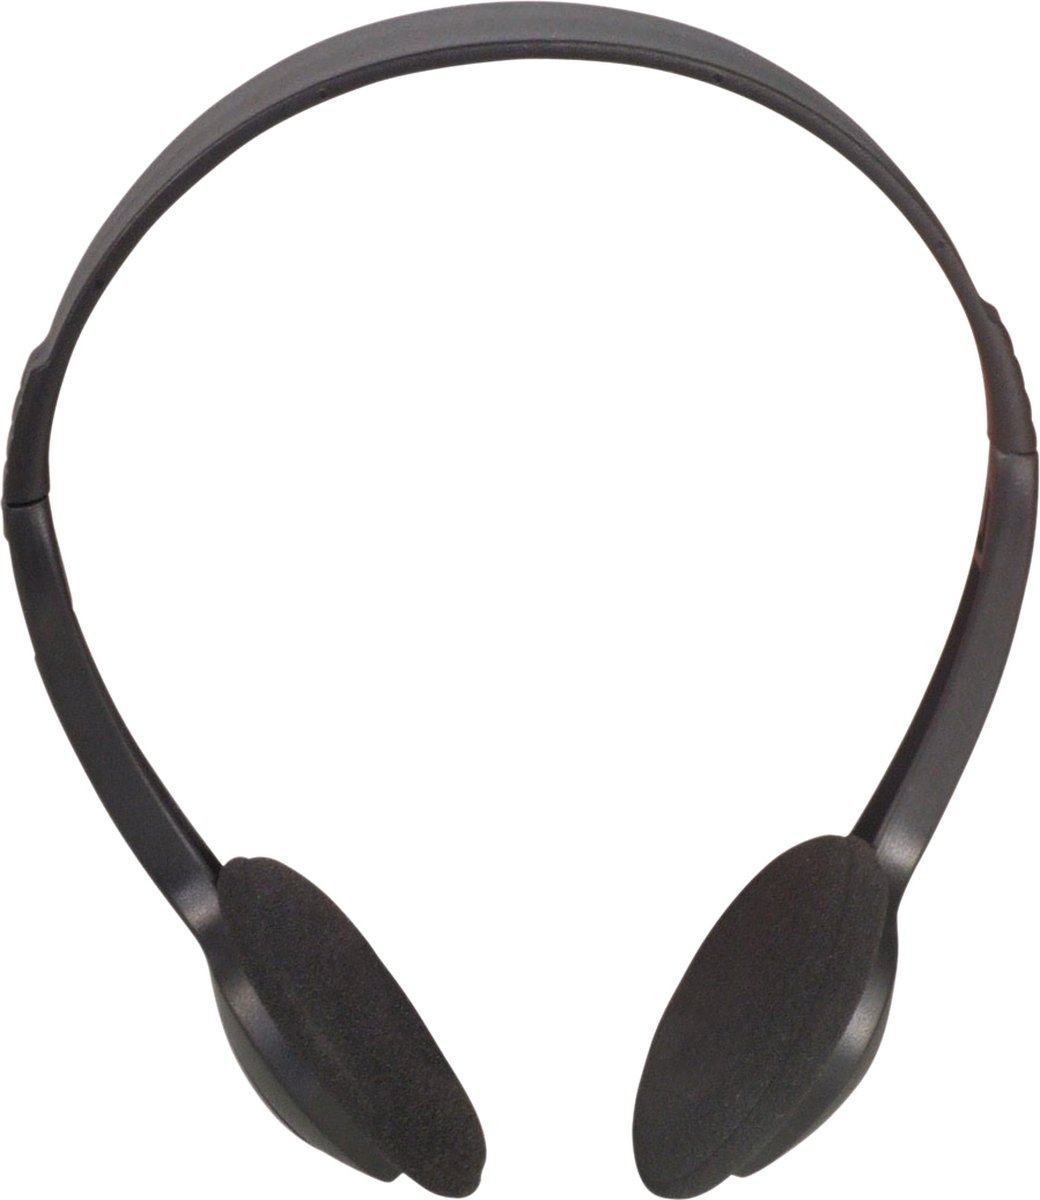 SoundLab Lichtgewicht Budget Koptelefoon - Stereo - Zwart - 80cm kabel - 3,5mm Mini Jack aansluiting